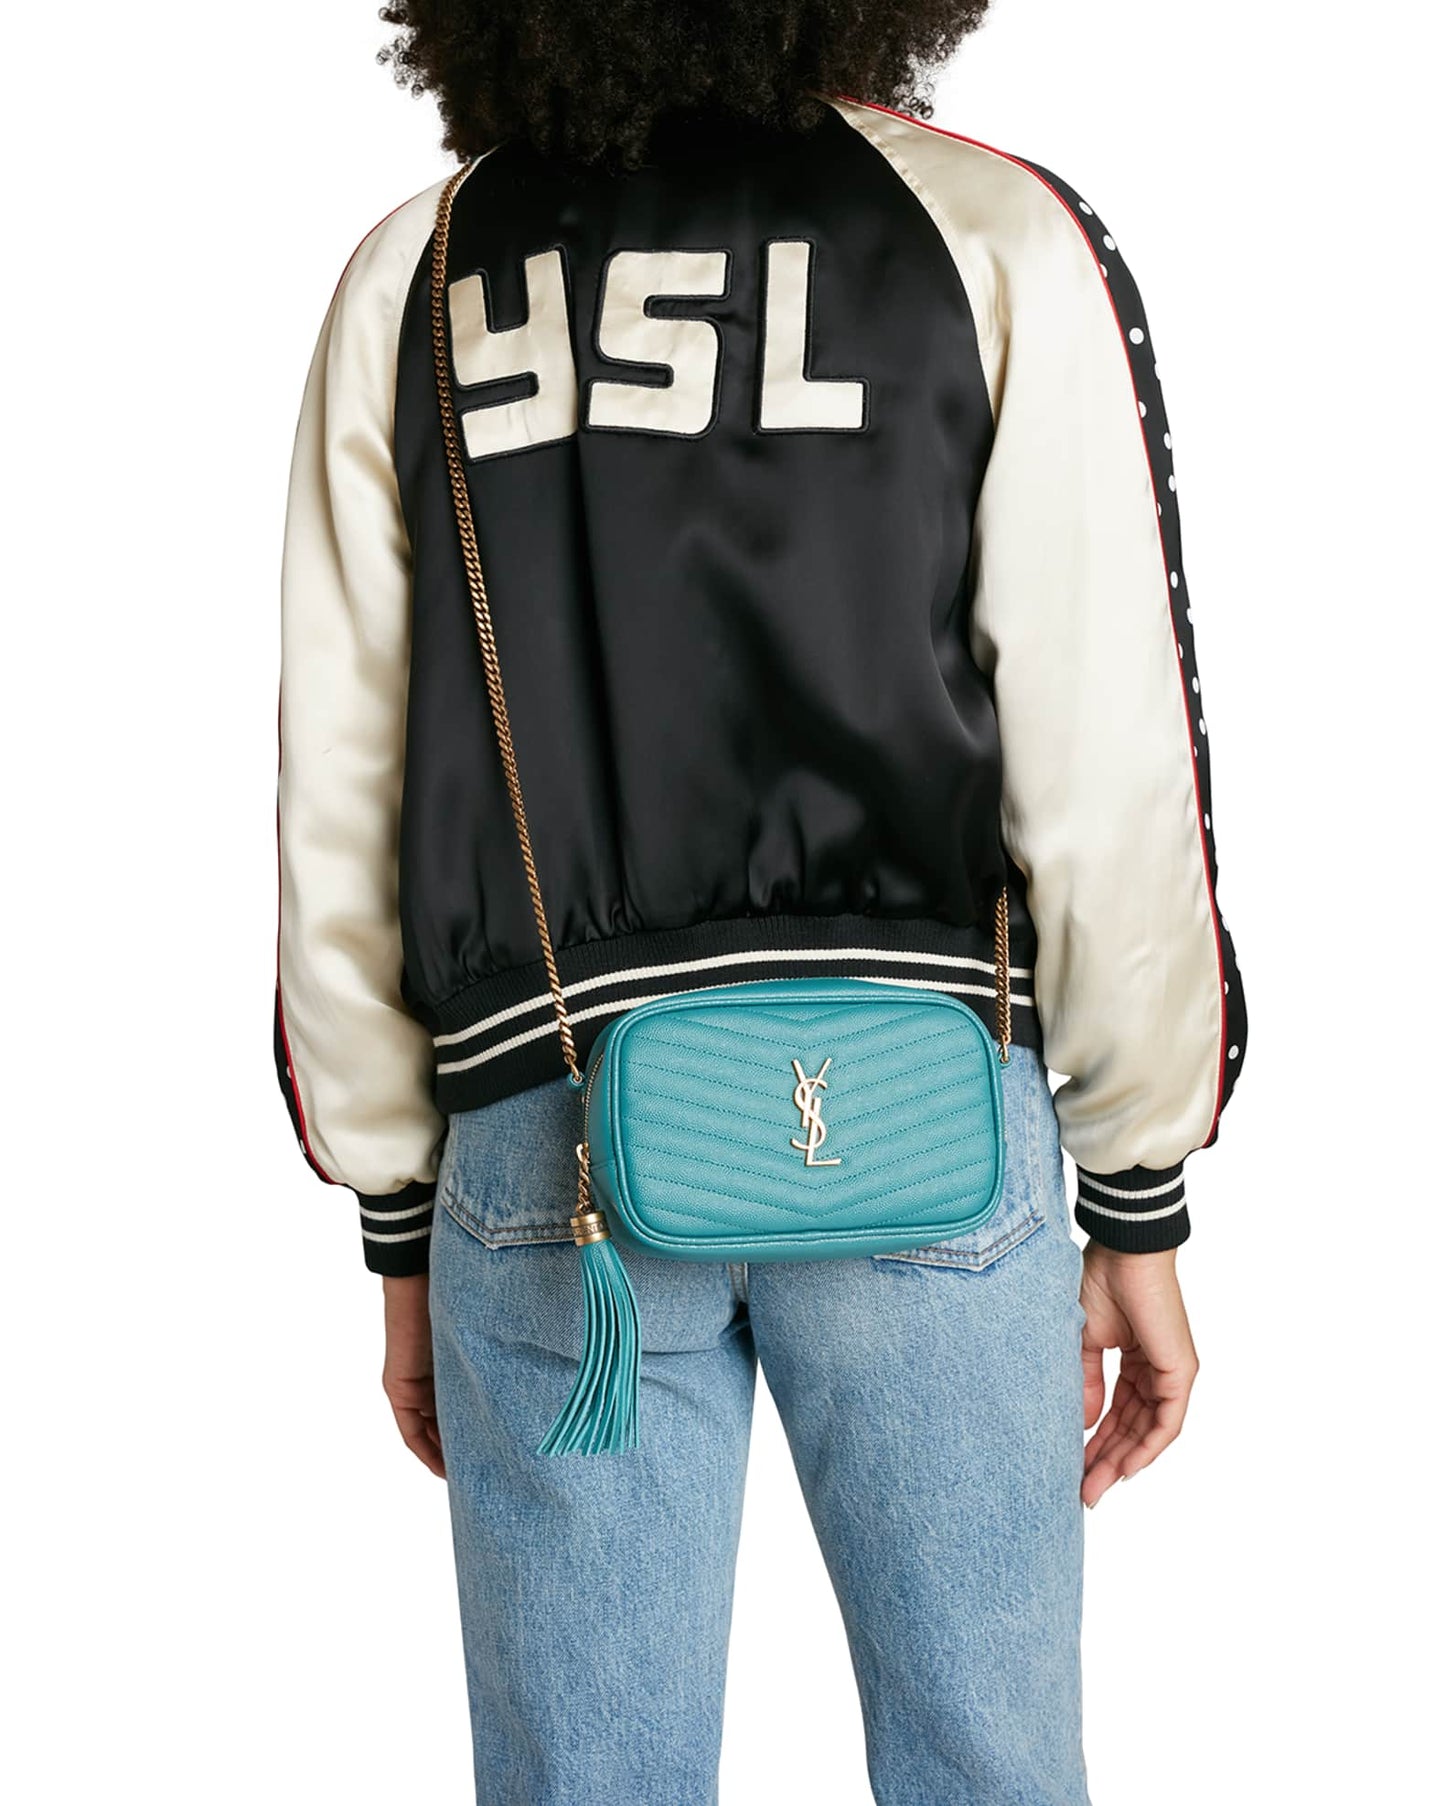 SAINT LAURENT Mini Lou YSL Monogram Leather Camera Bag In Polka